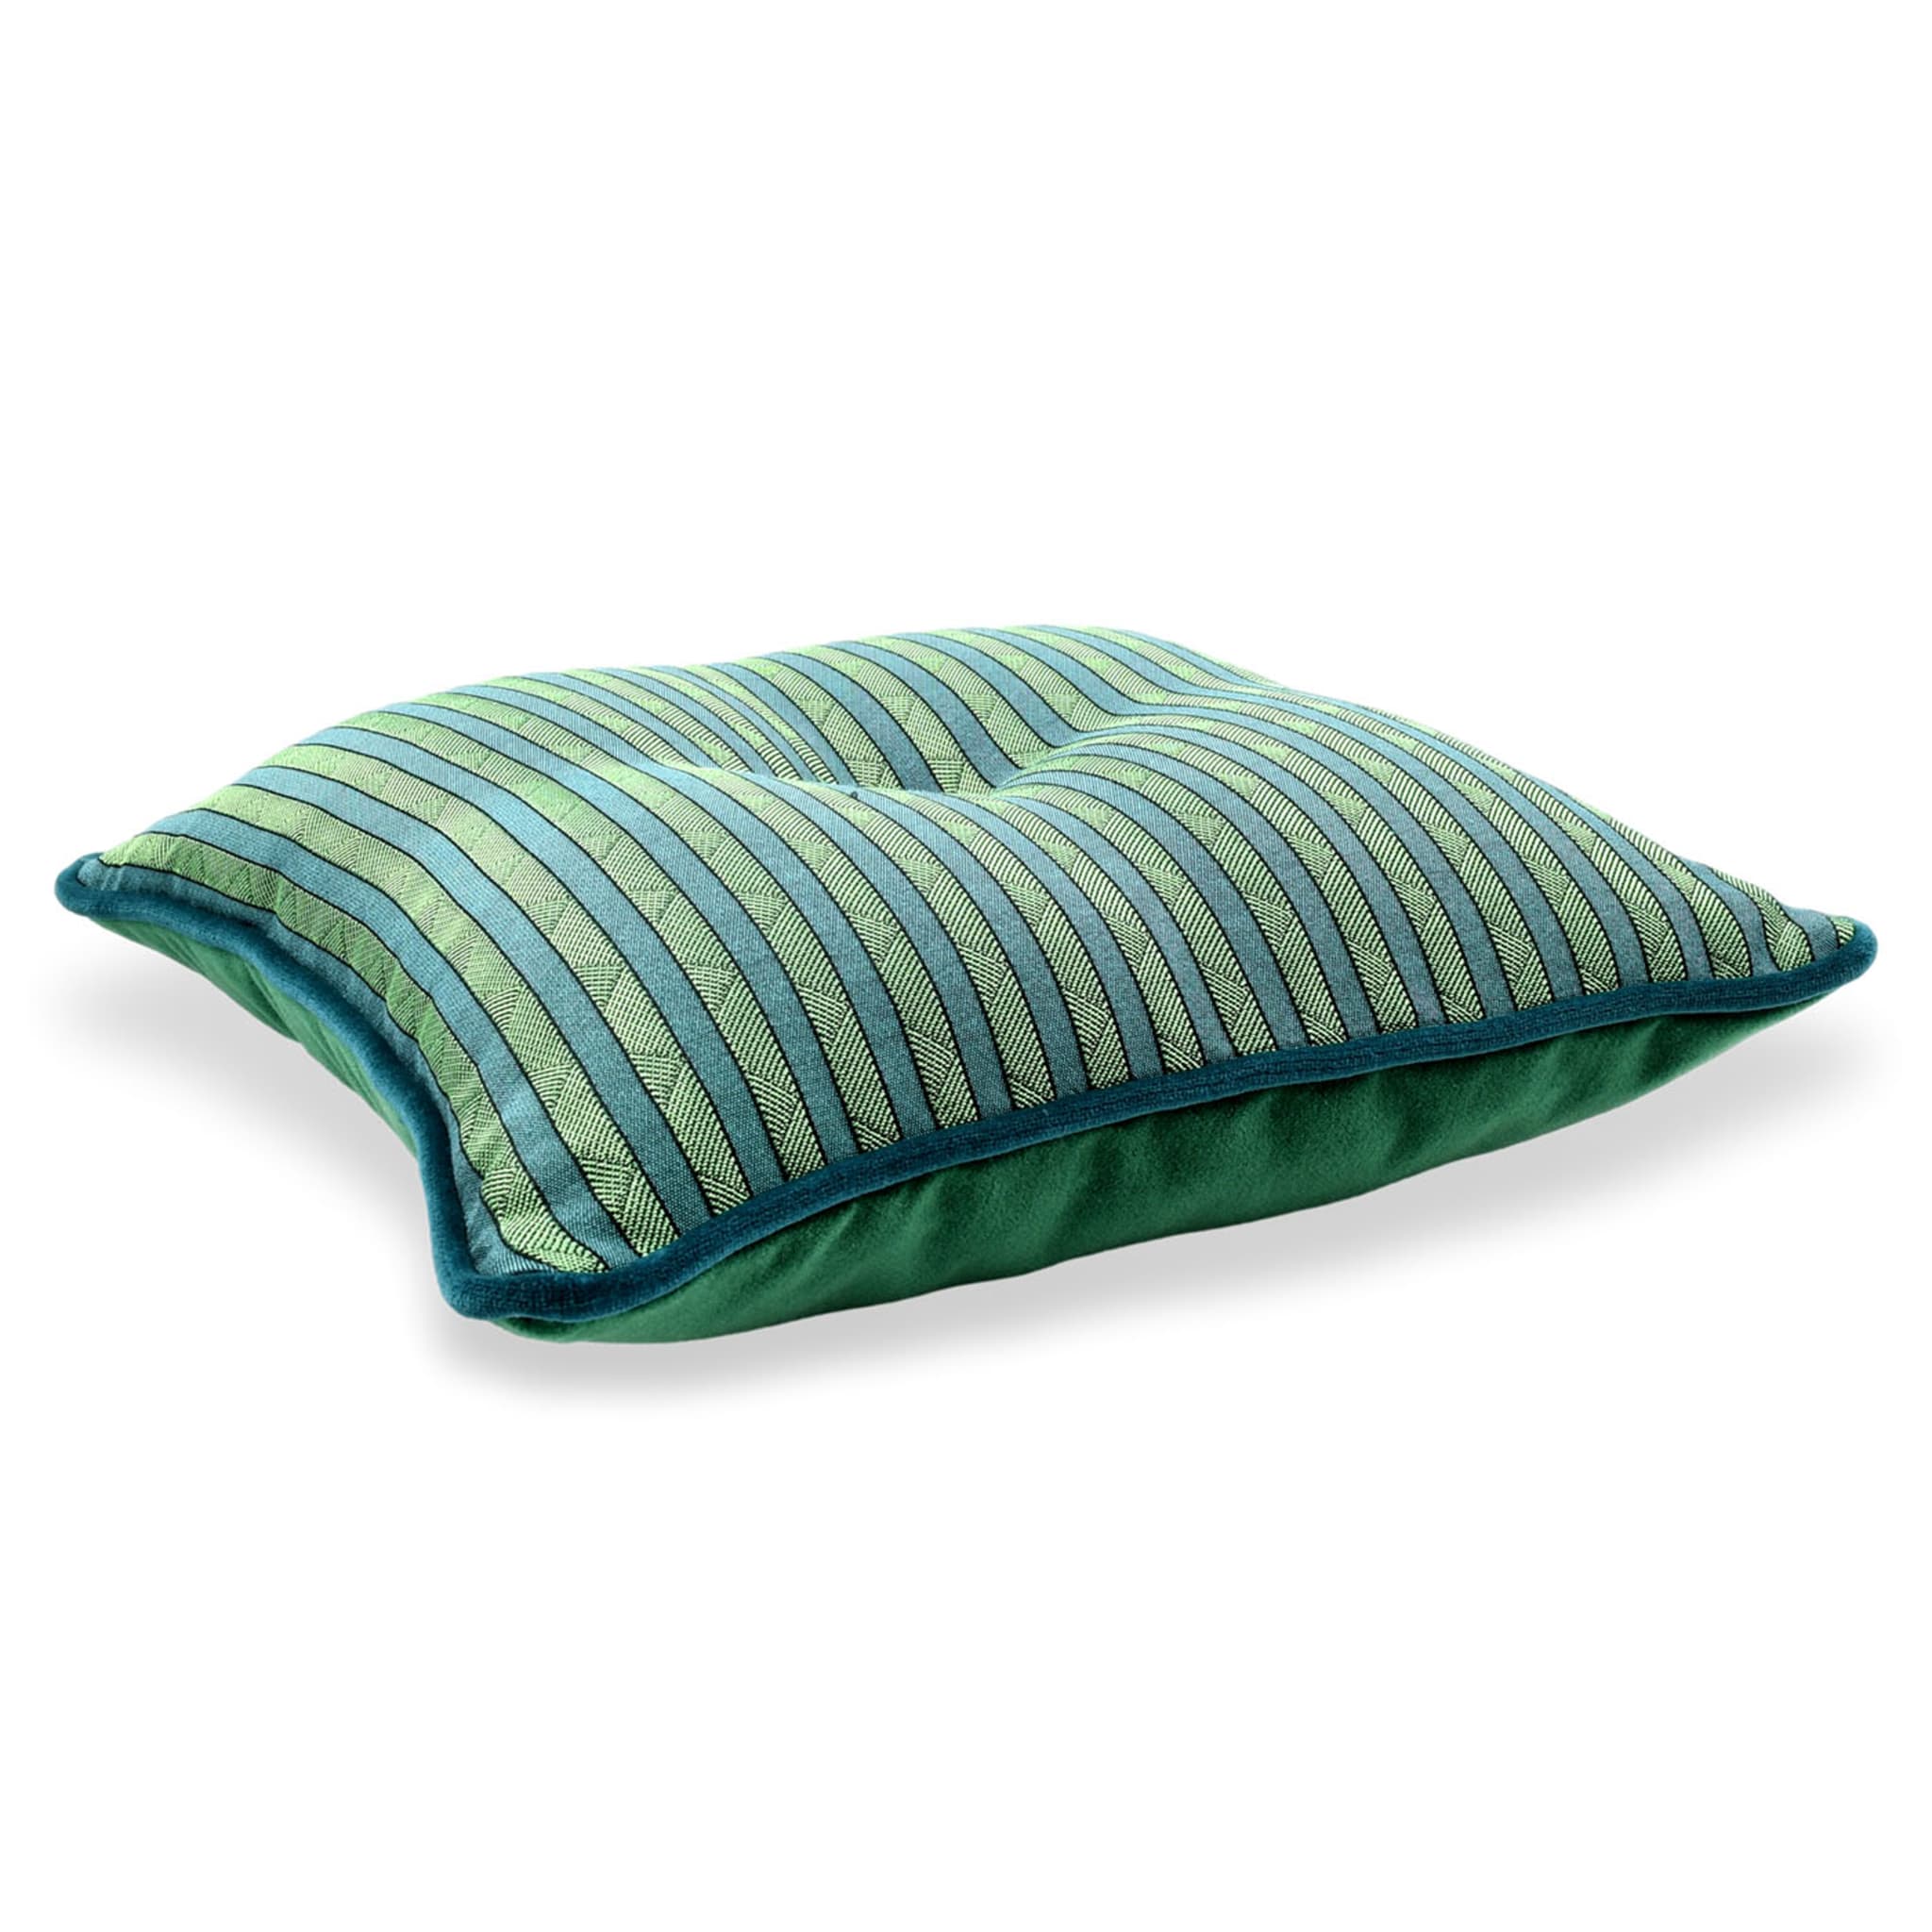 Emerald Carré Cushion in striped jacquard fabric - Alternative view 1